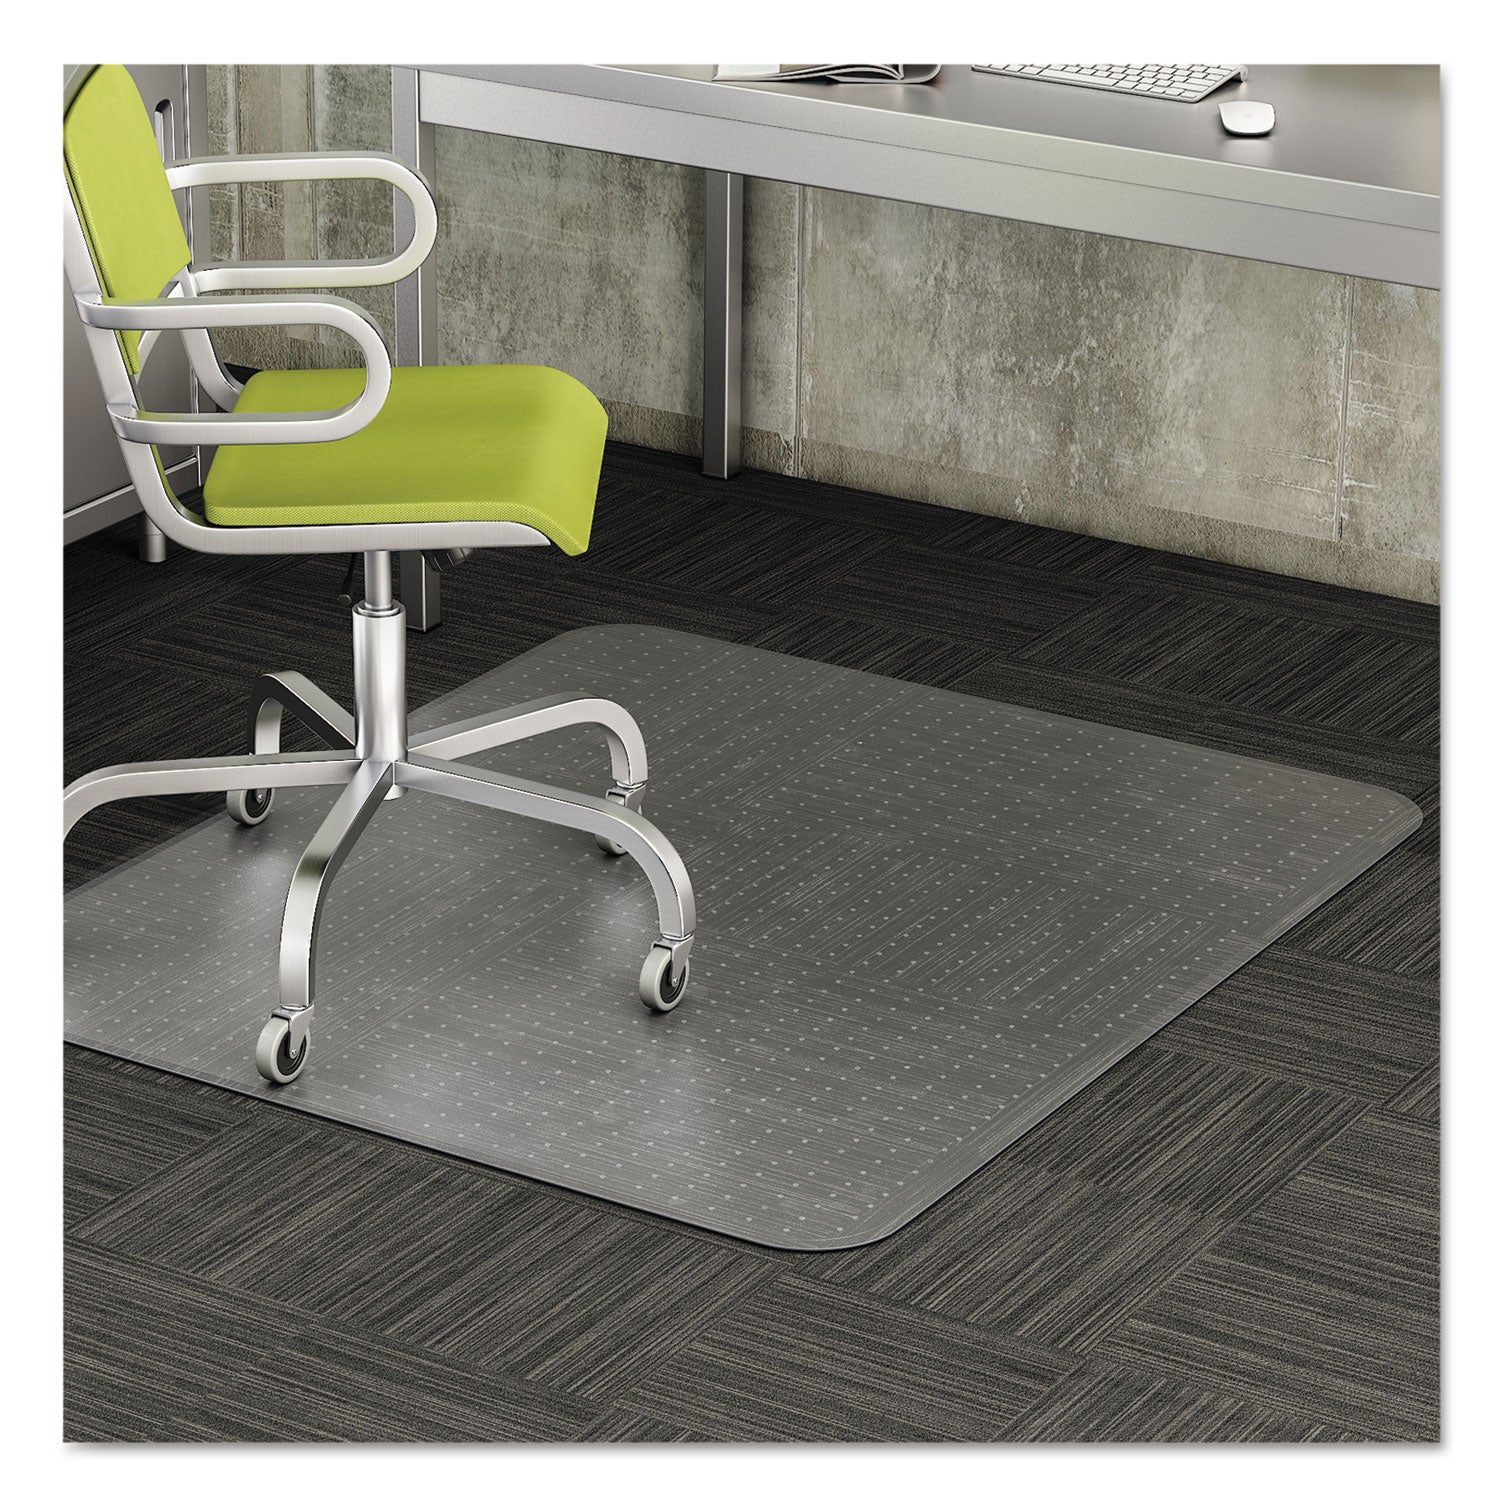 DuraMat Moderate Use Chair Mat, Low Pile Carpet, Flat, 36 x 48, Lipped, Clear - 